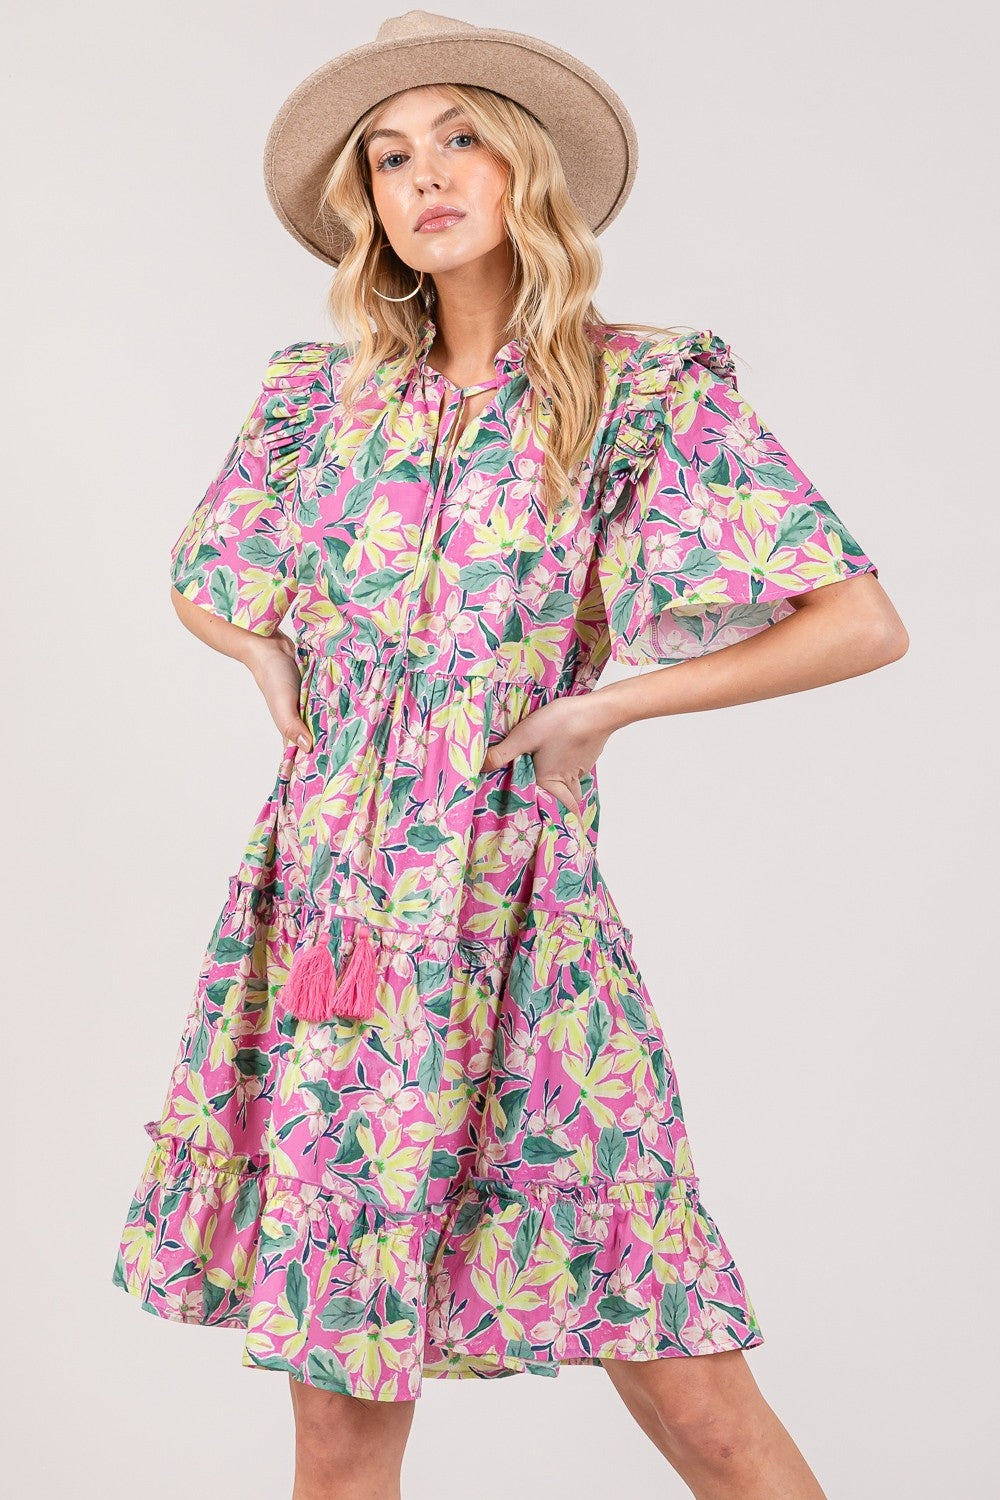 SAGE + FIG Floral Ruffle Short Sleeve Dress - Tigbul's Variety Fashion Shop